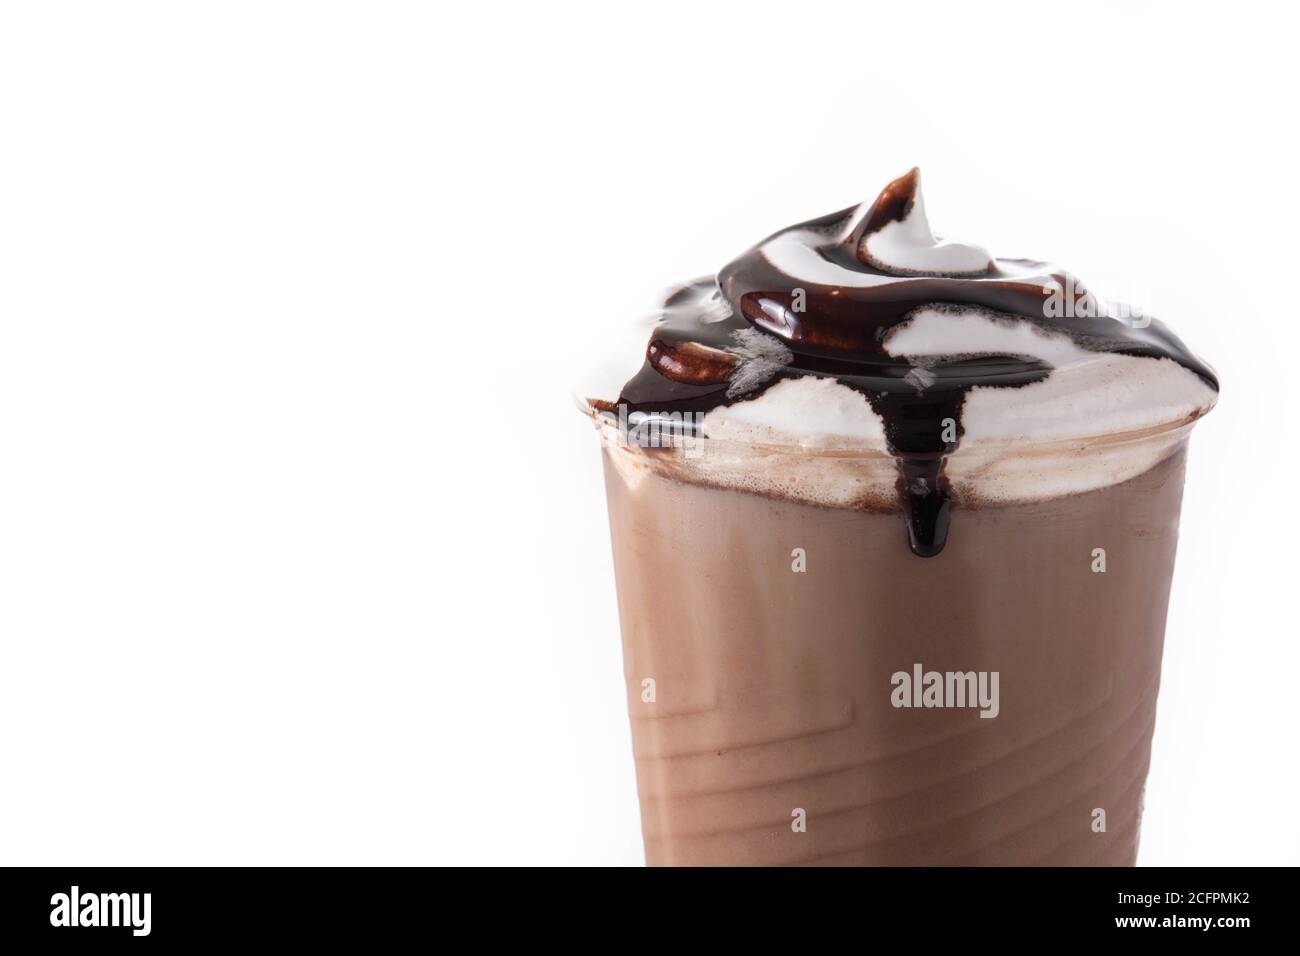 https://c8.alamy.com/comp/2CFPMK2/chocolate-iced-milkshake-isolated-on-white-background-2CFPMK2.jpg